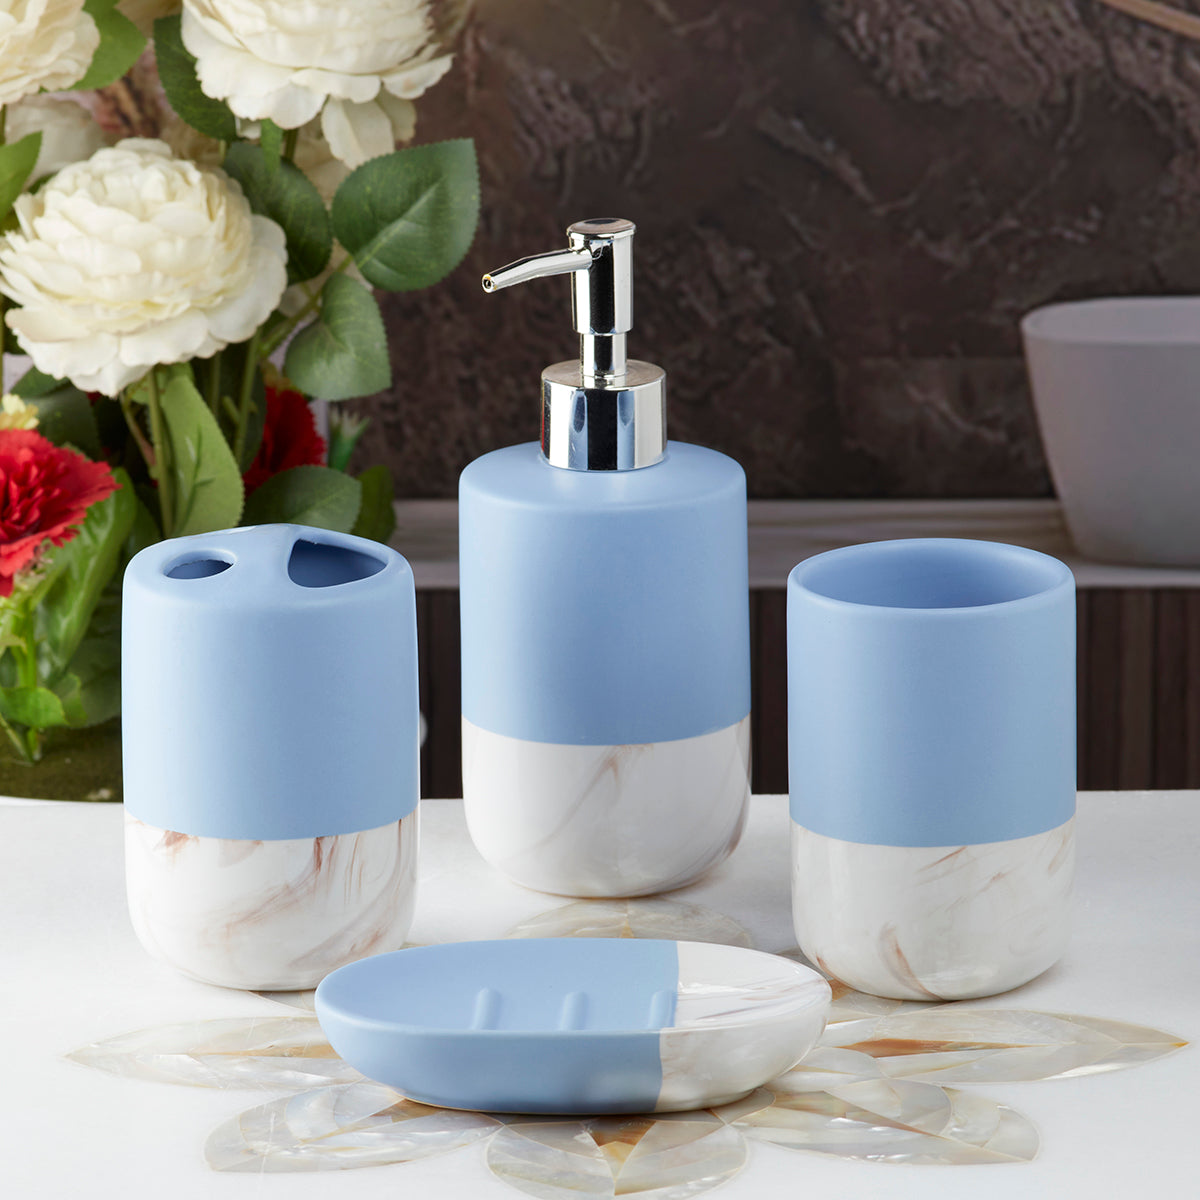 Ceramic Bathroom Accessories Set of 4 Bath Set with Soap Dispenser (9621)